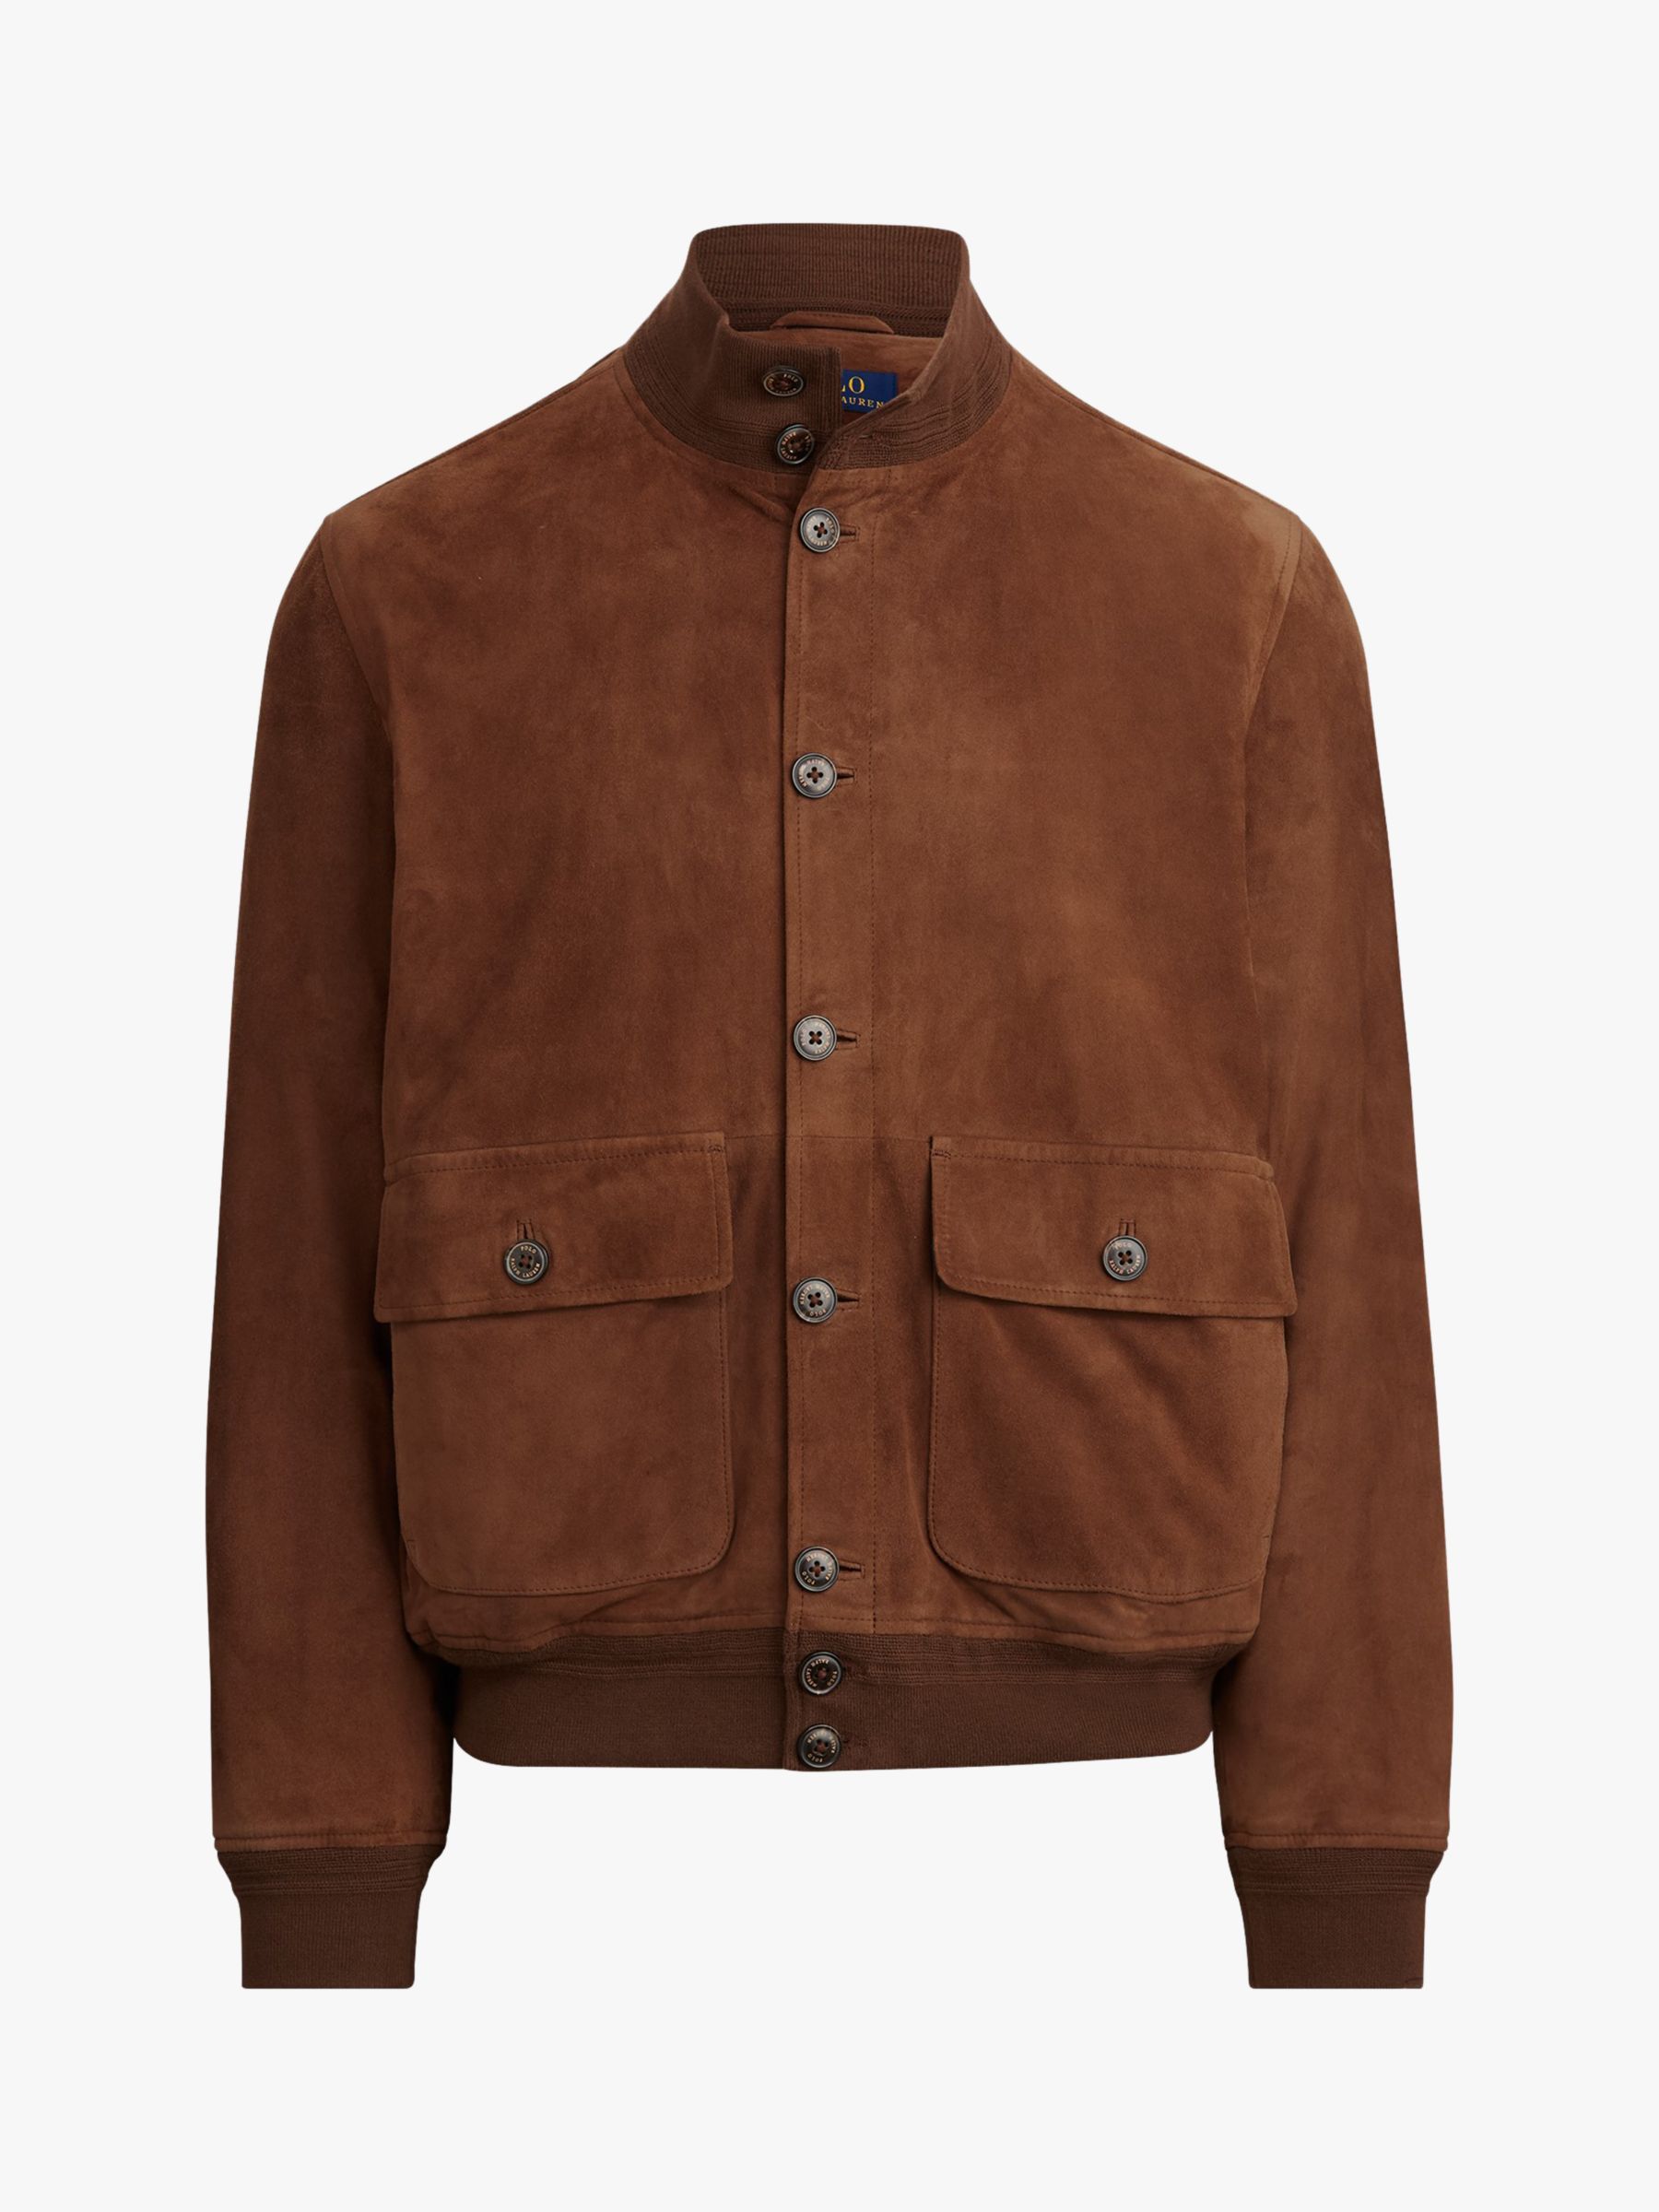 polo jacket brown